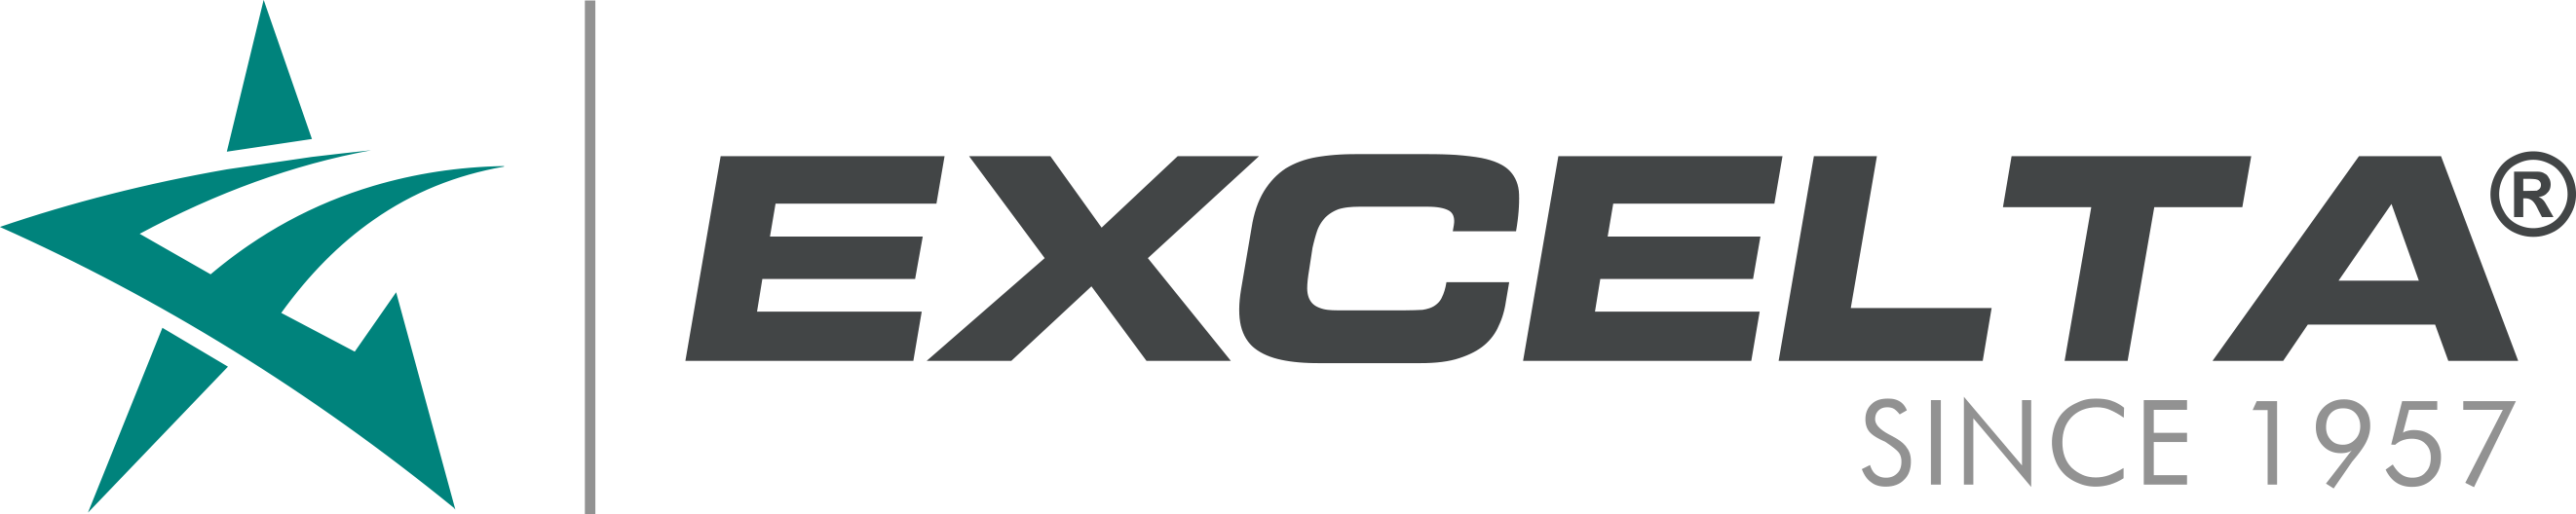 Excelta Corporation